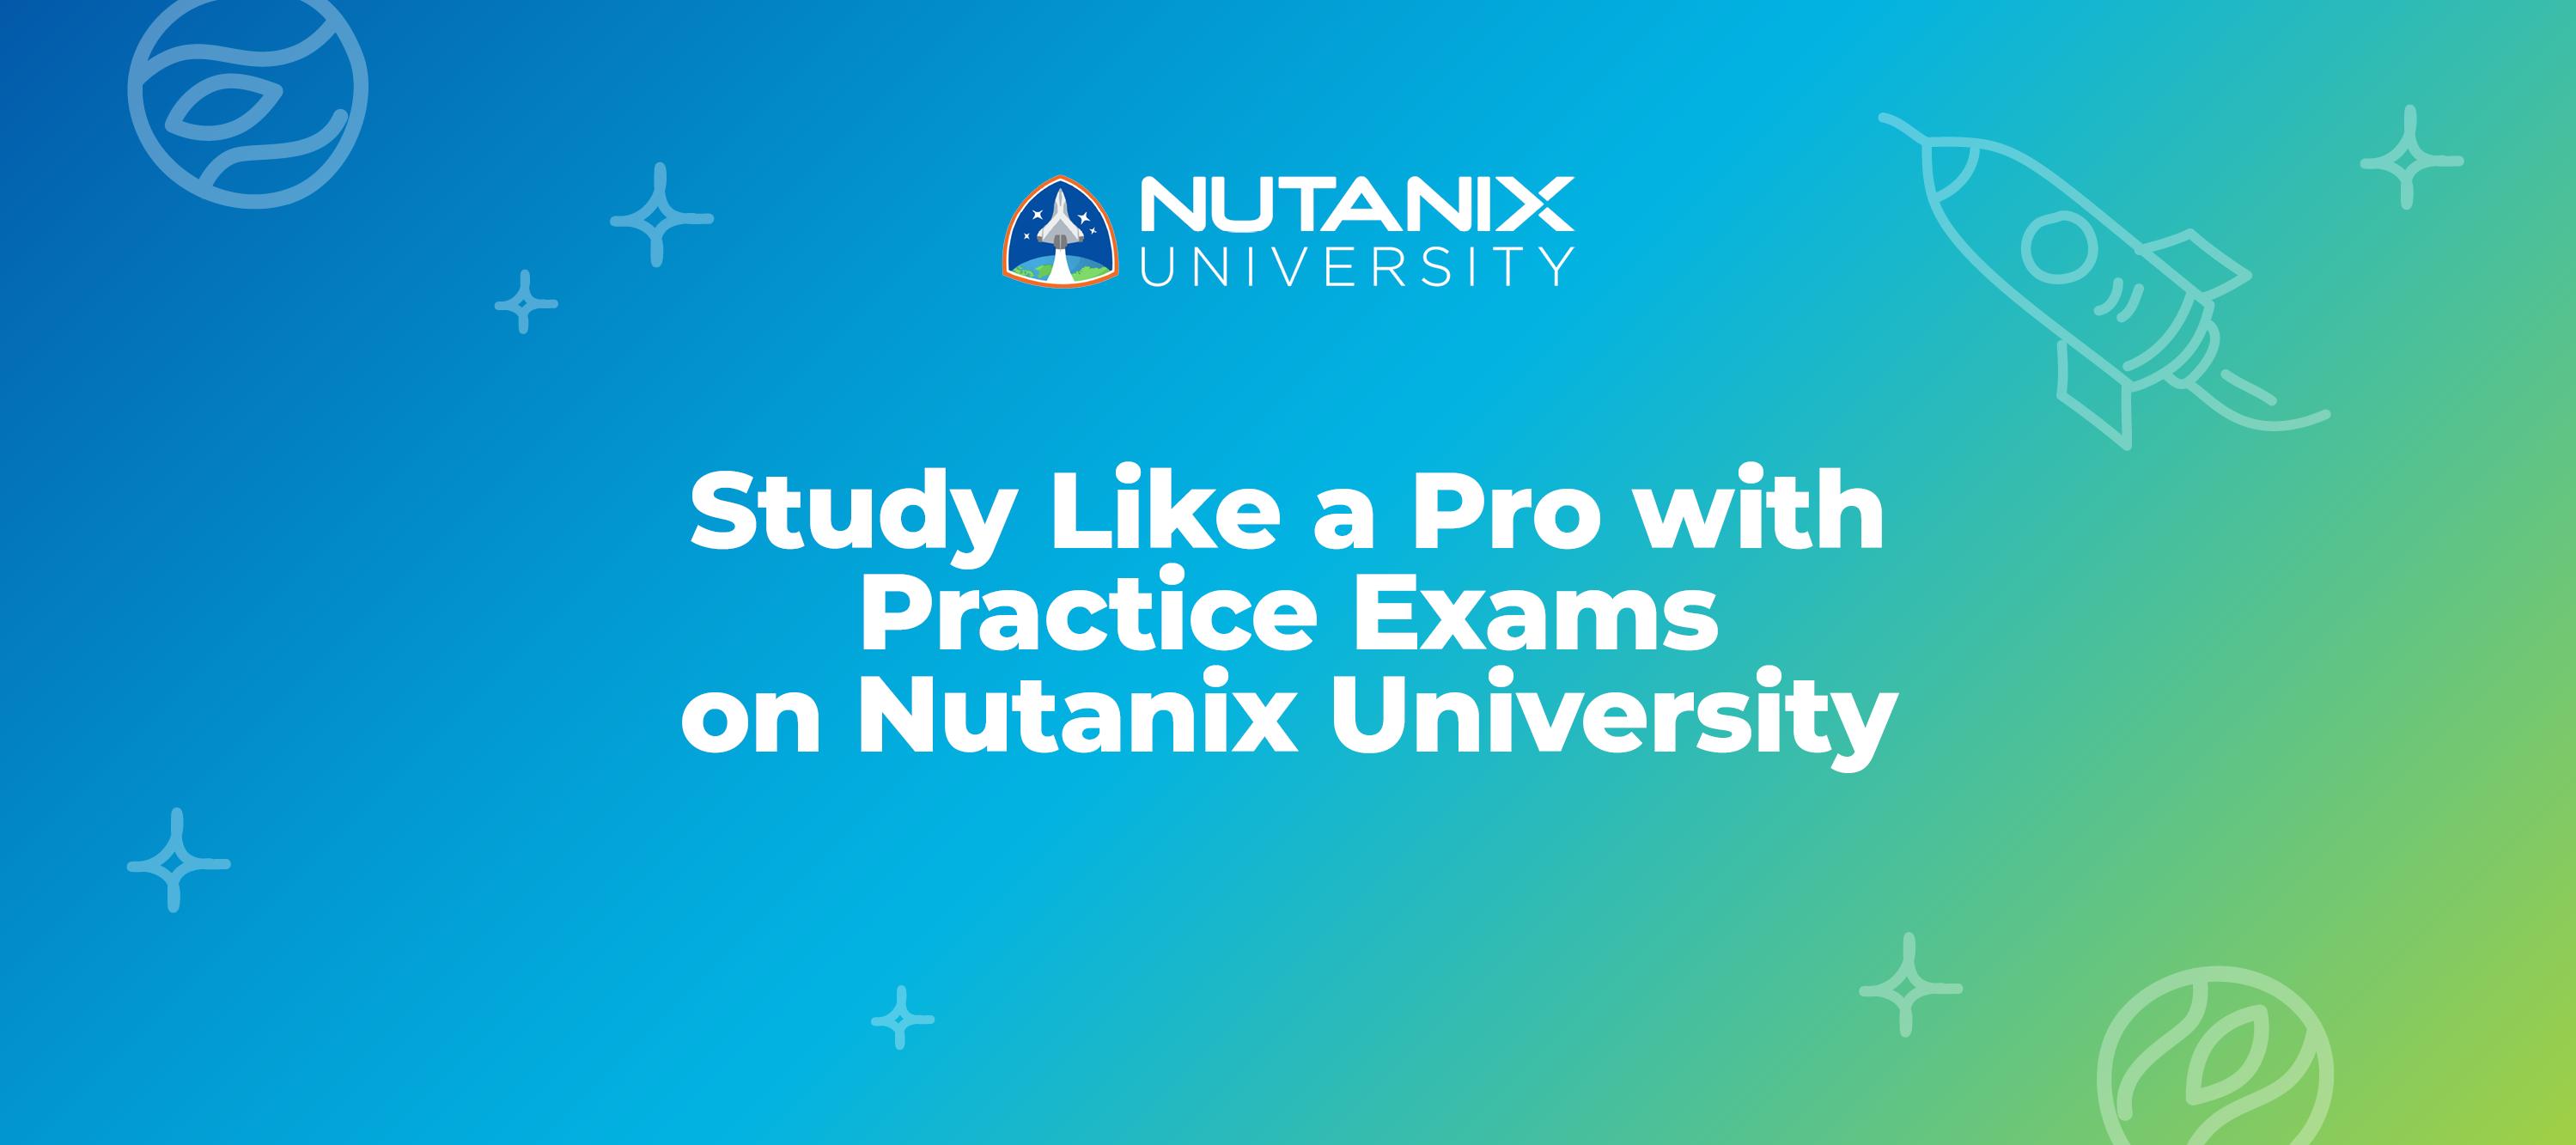 Study like a Pro with Practice Exams on Nutanix University